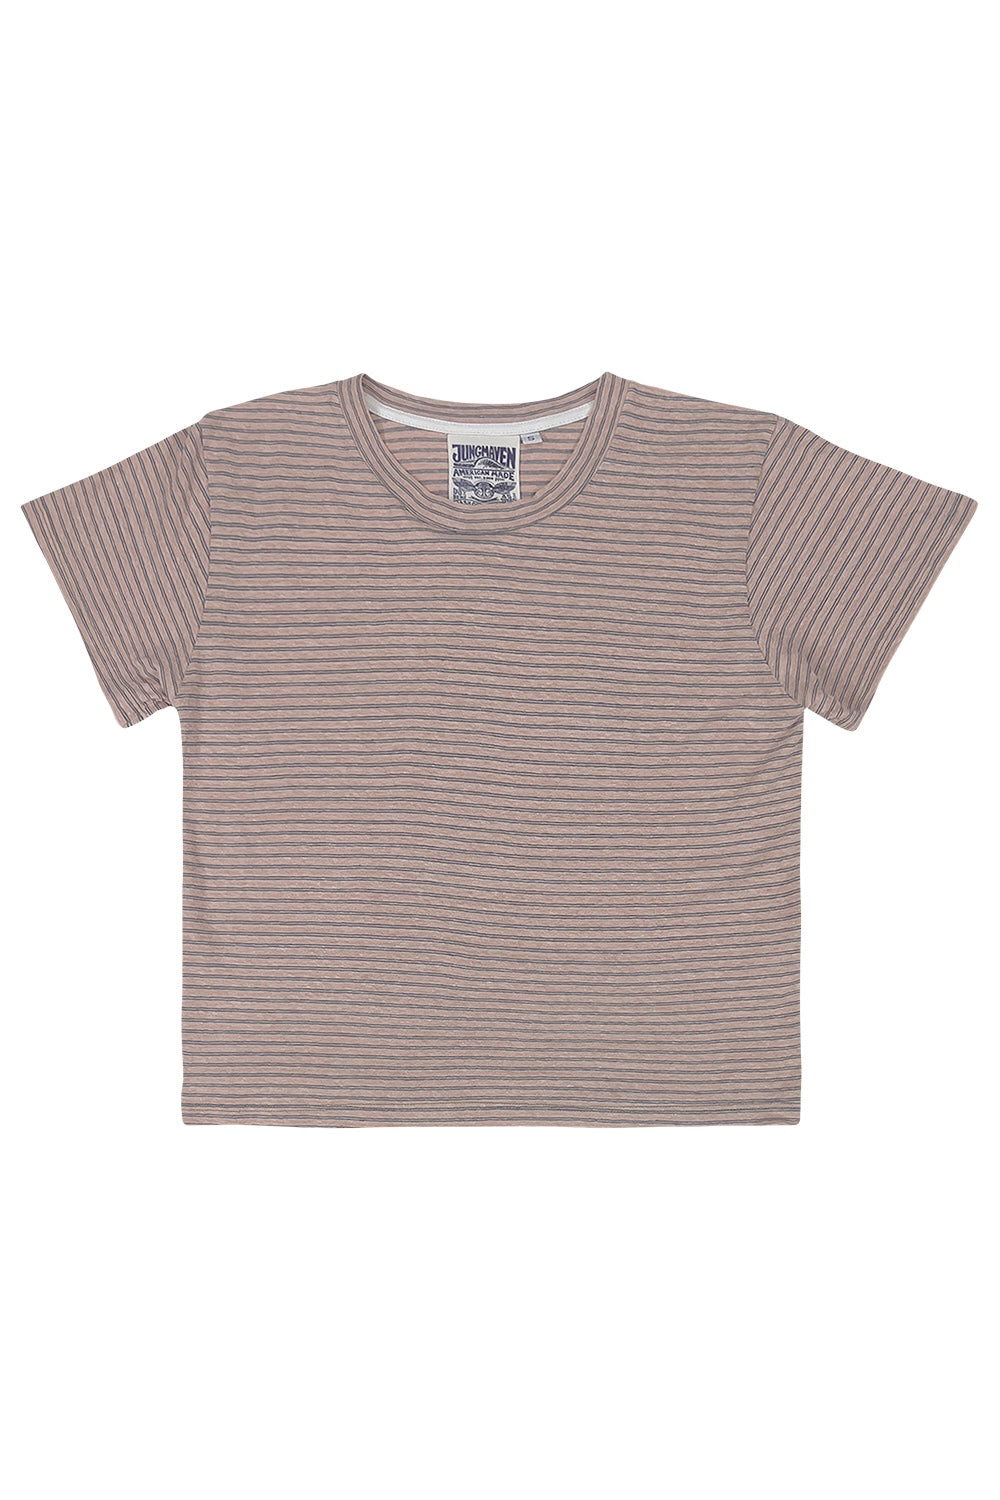 Stripe Cropped Lorel Tee | Jungmaven Hemp Clothing & Accessories / Color: Pink/Blue/Canvas Thin Stripe